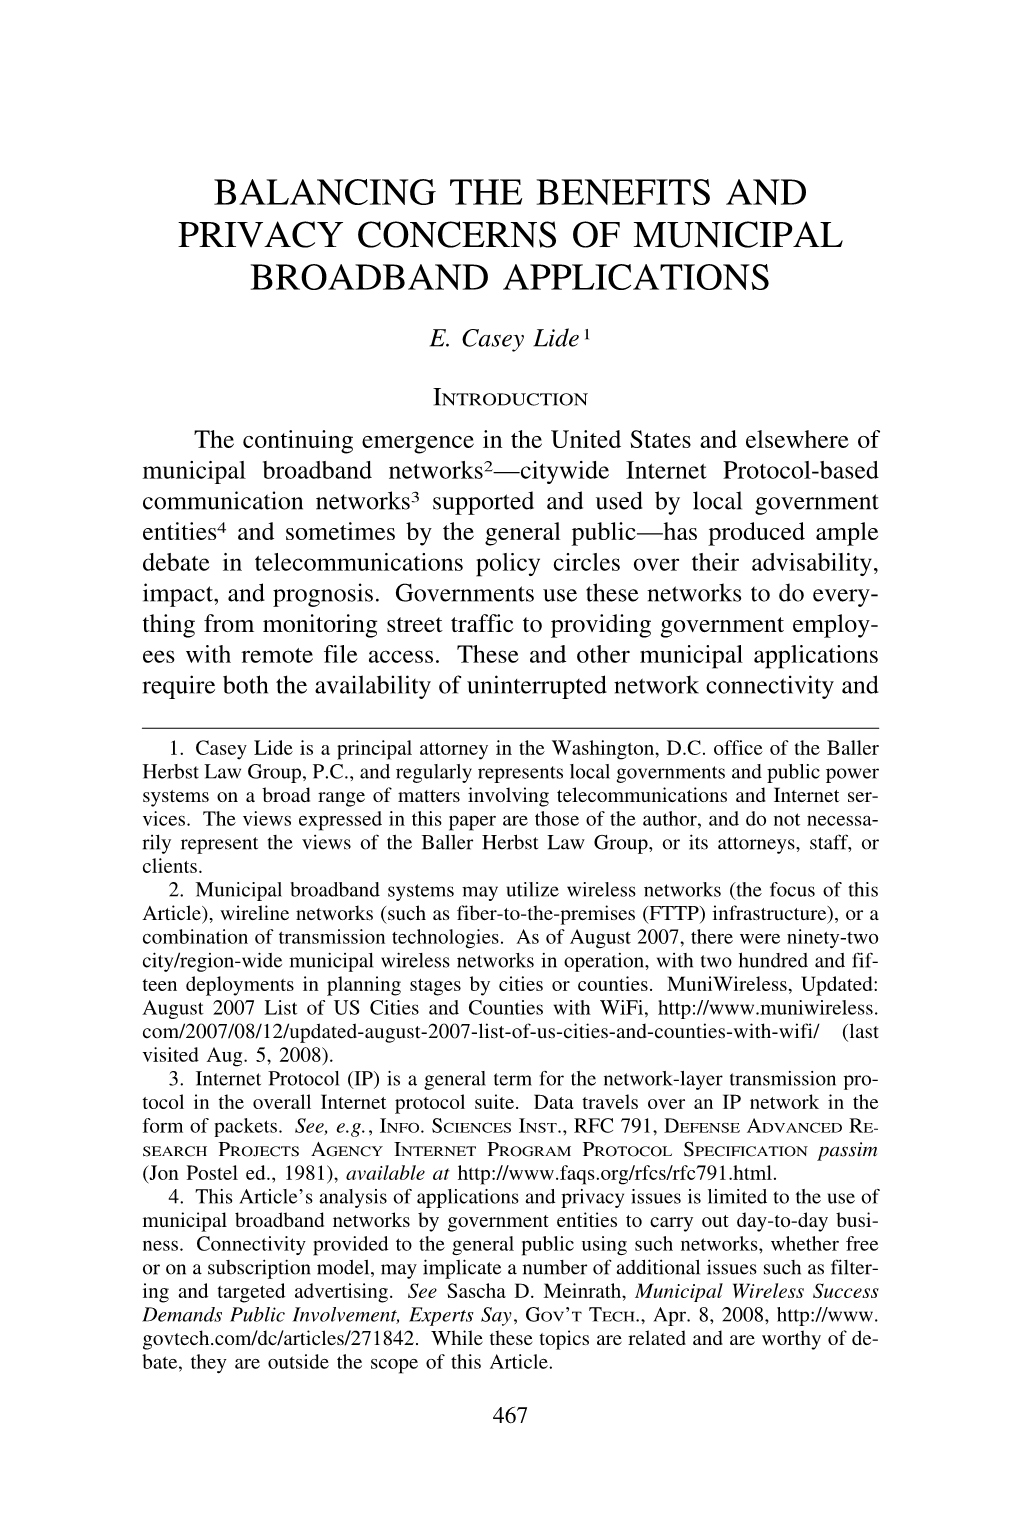 Balancing the Benefits and Privacy Concerns of Municipal Broadband Applications